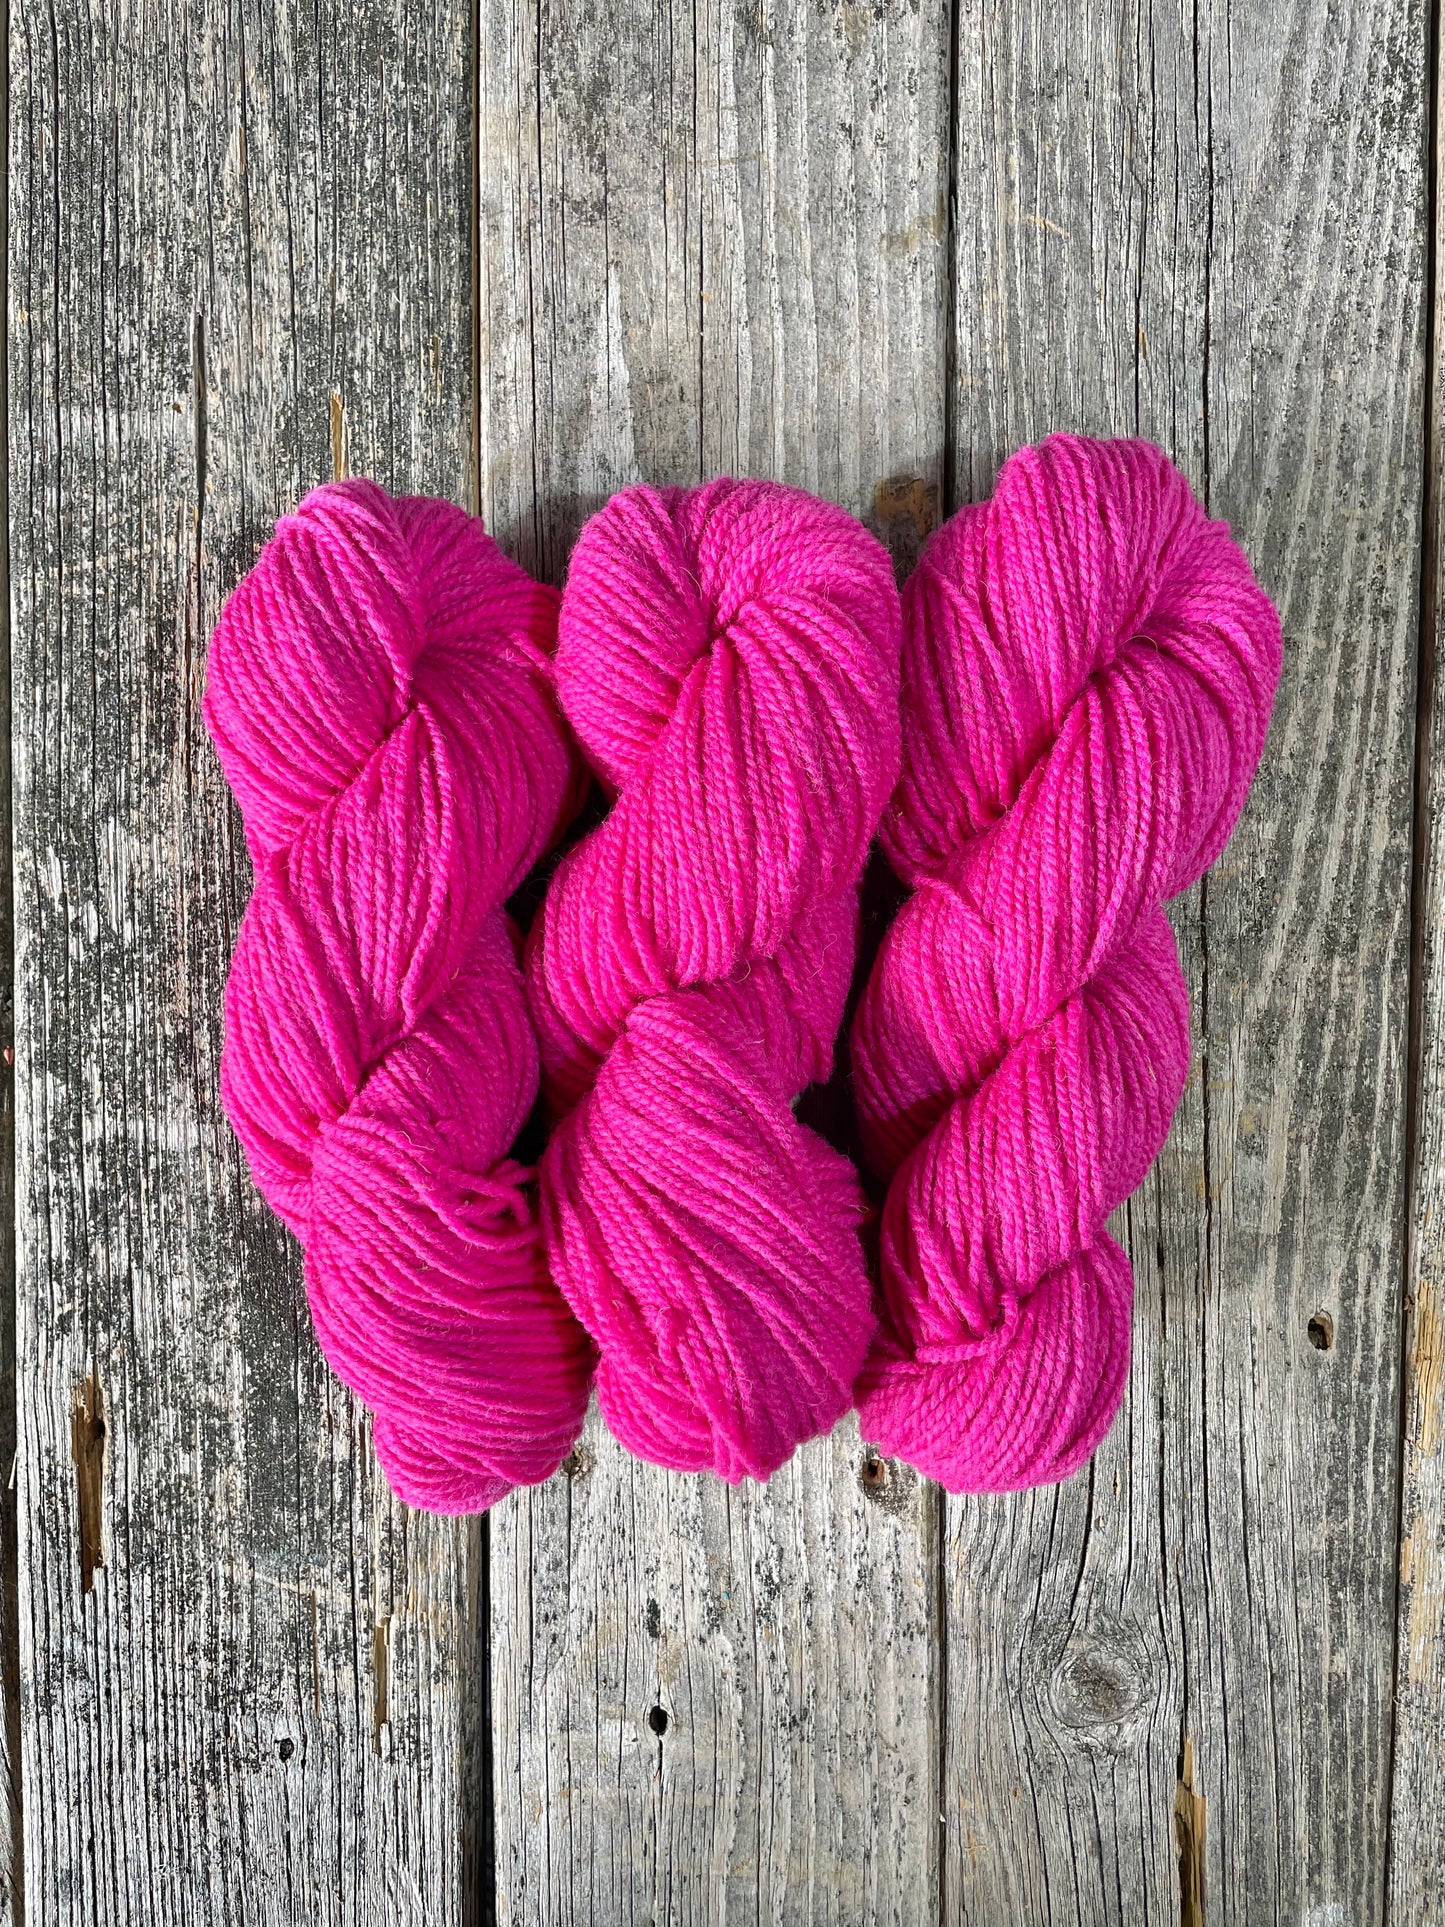 Briggs & Little Tuffy: Magenta - Maine Yarn & Fiber Supply